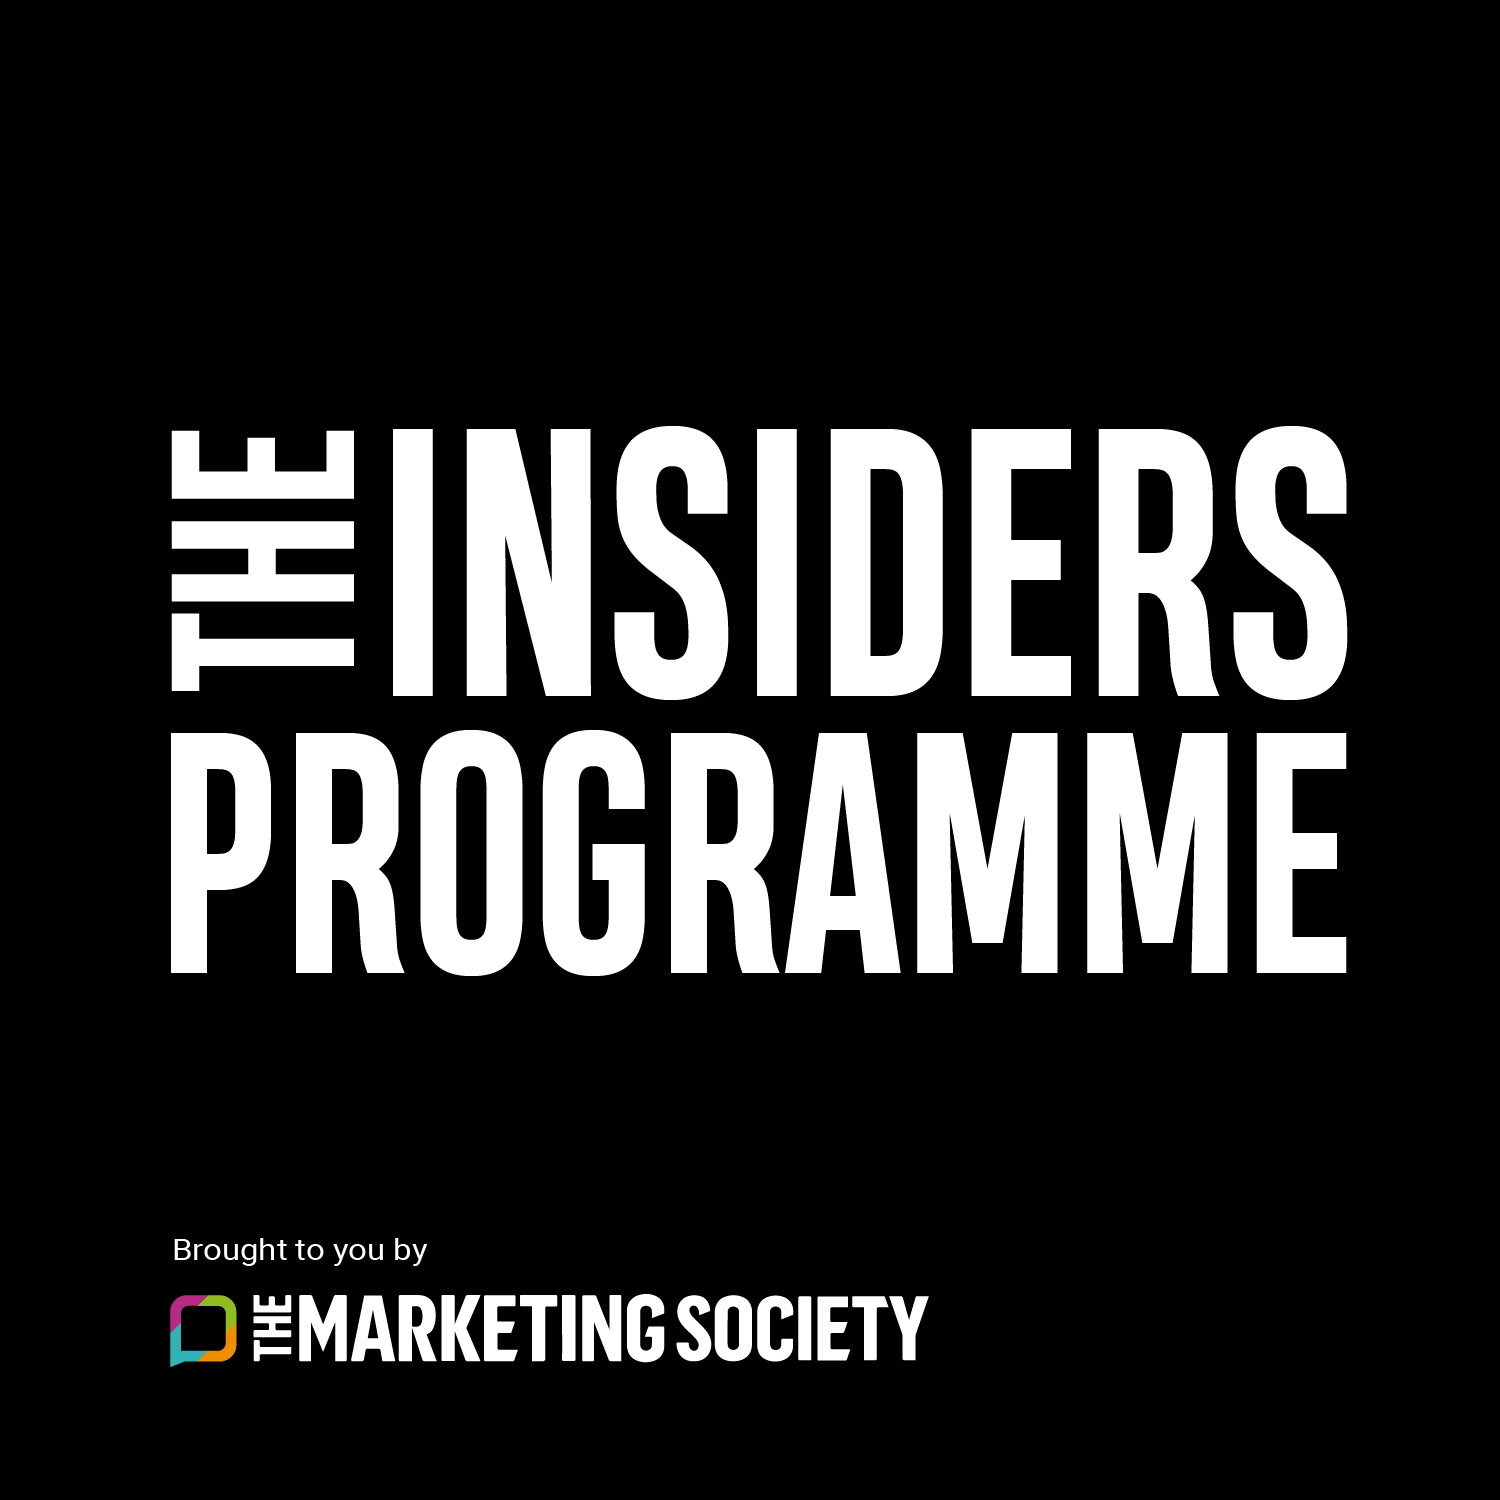 The Marketing Society Insiders Programme